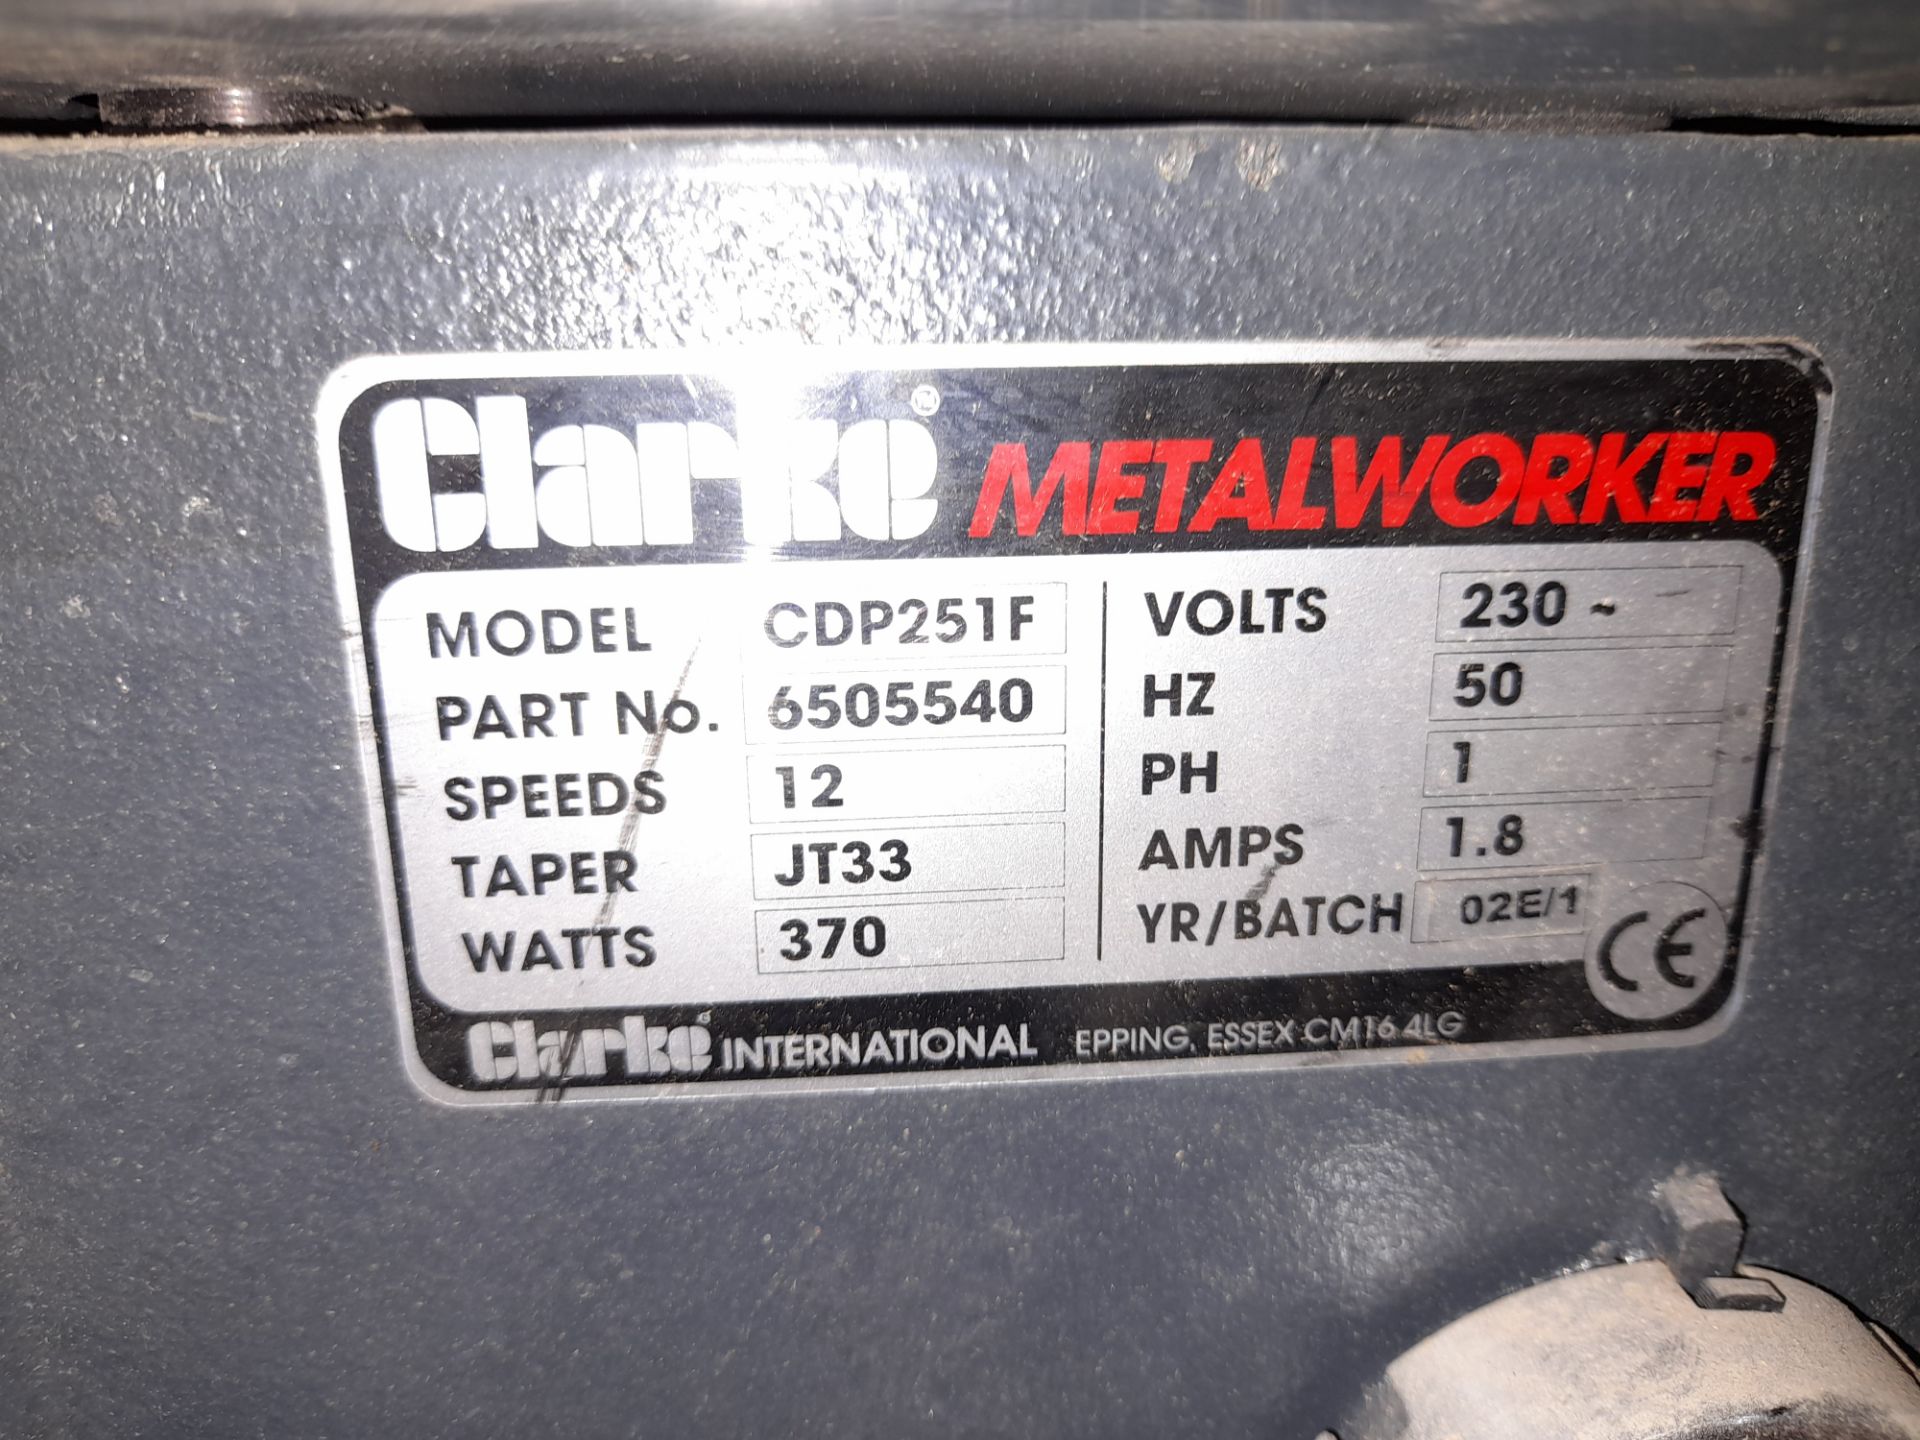 Clarke Metalworker Model CDP251F Pillar Drill, Yr/ - Image 2 of 2